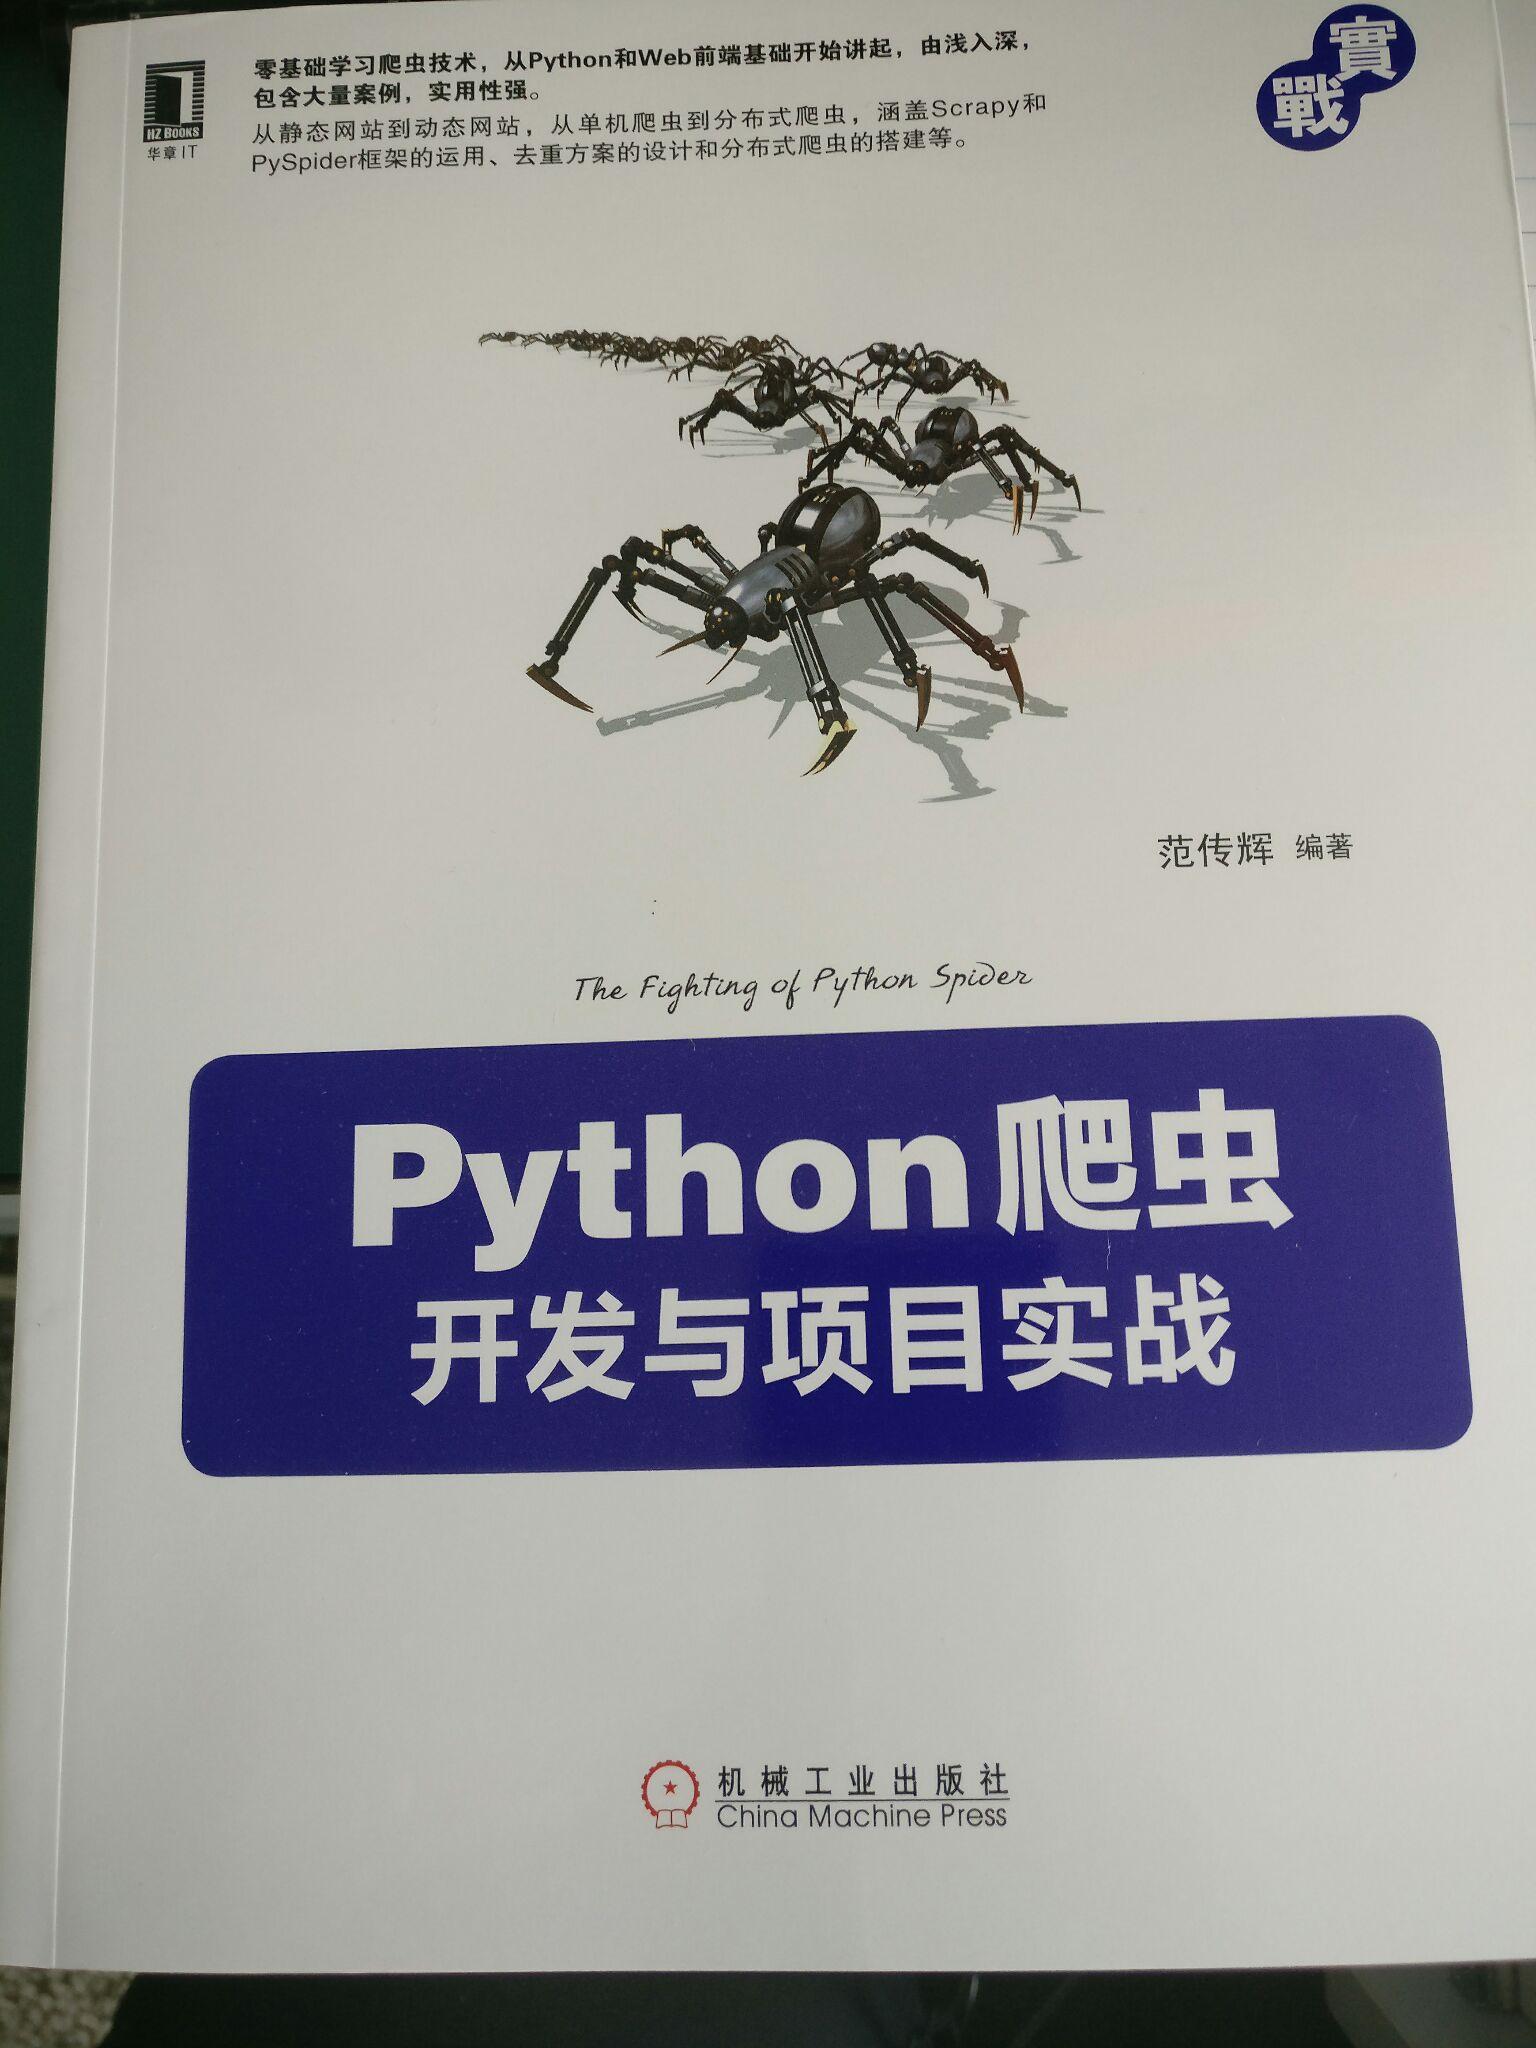 python3 图片爬虫.py - 开发实例、源码下载 - 好例子网